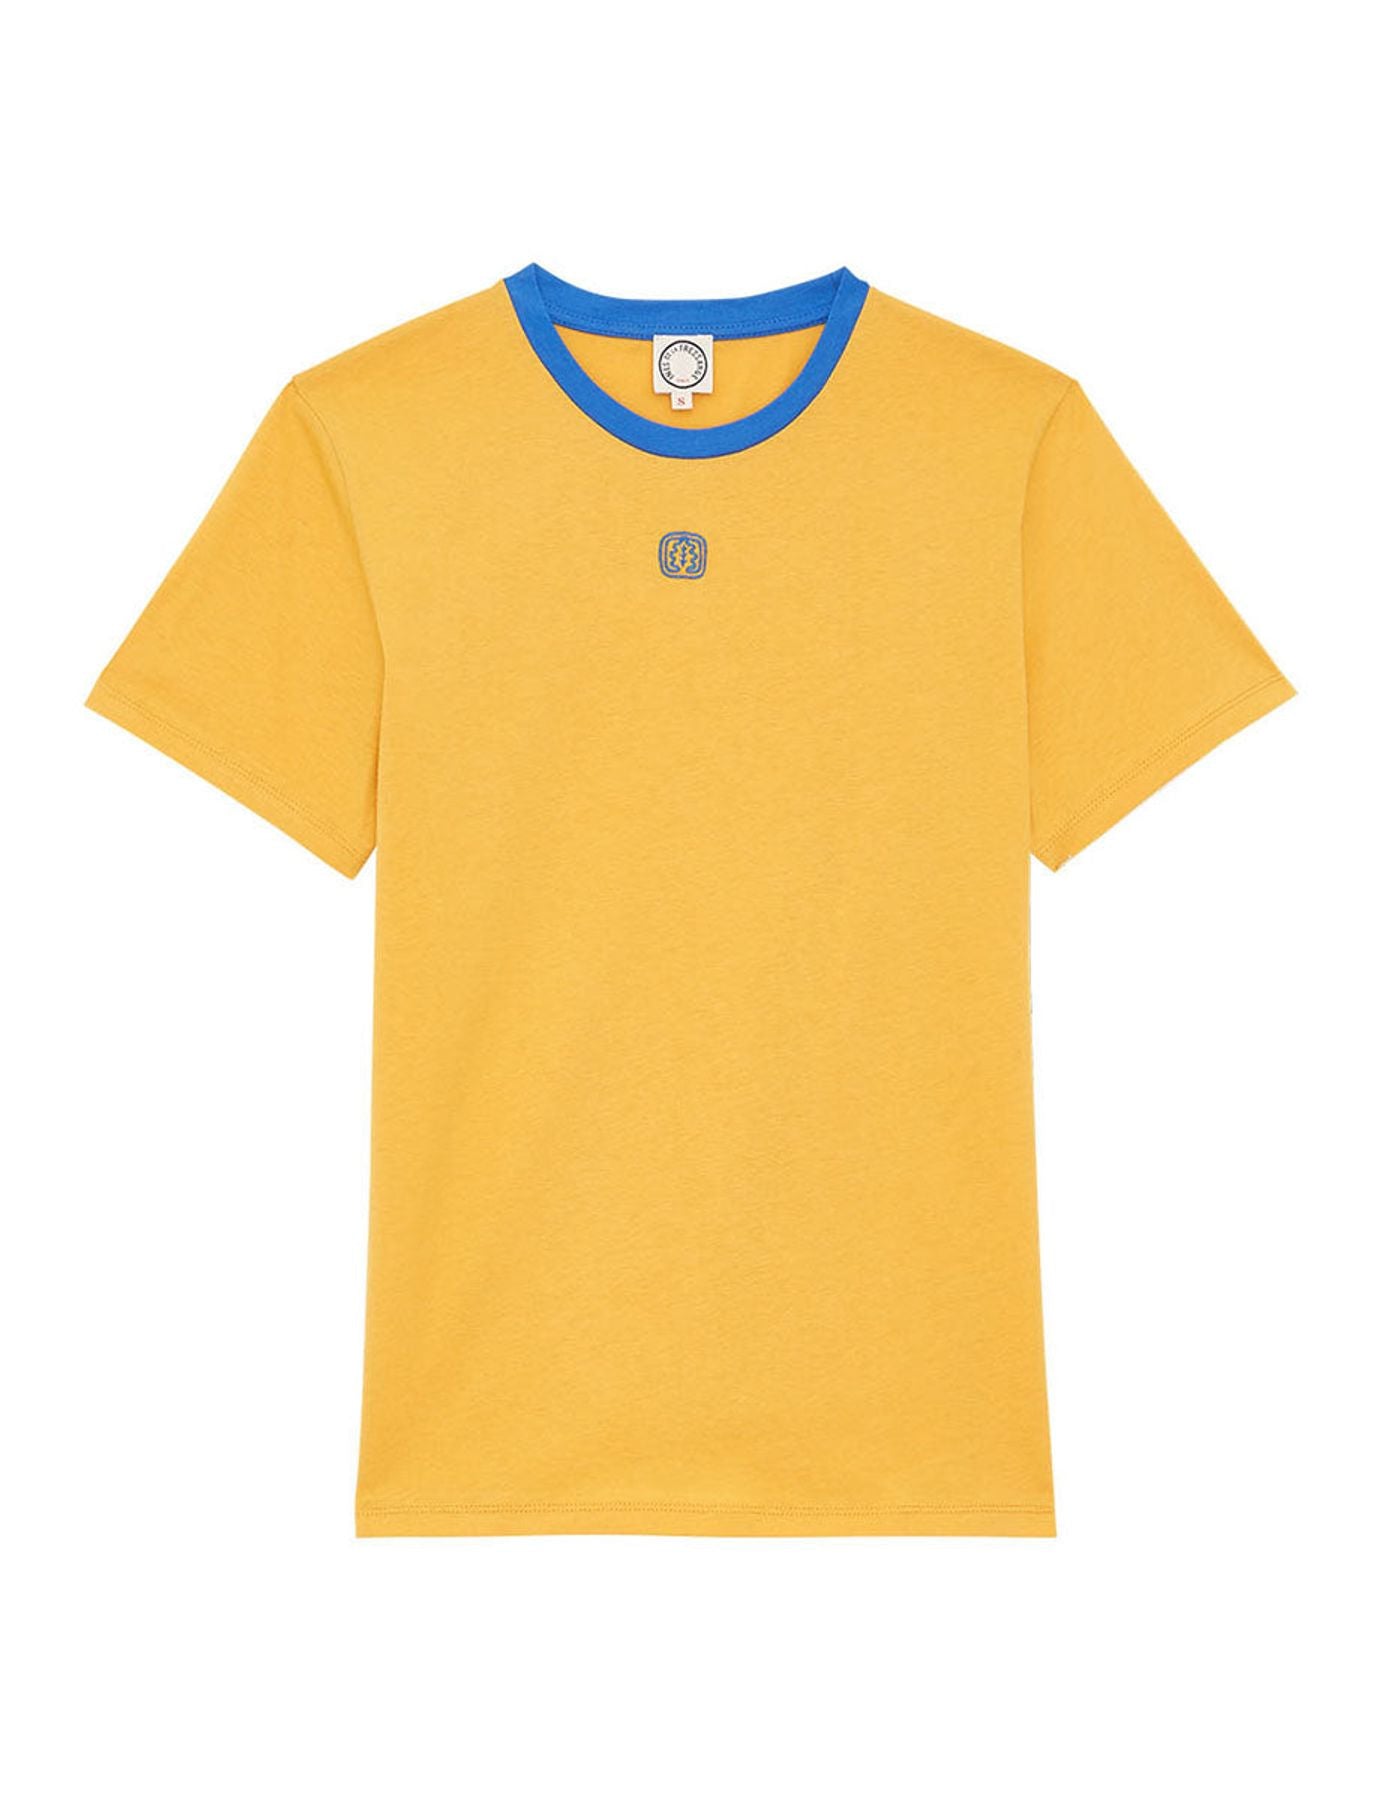 t-shirt-oscar-yellow